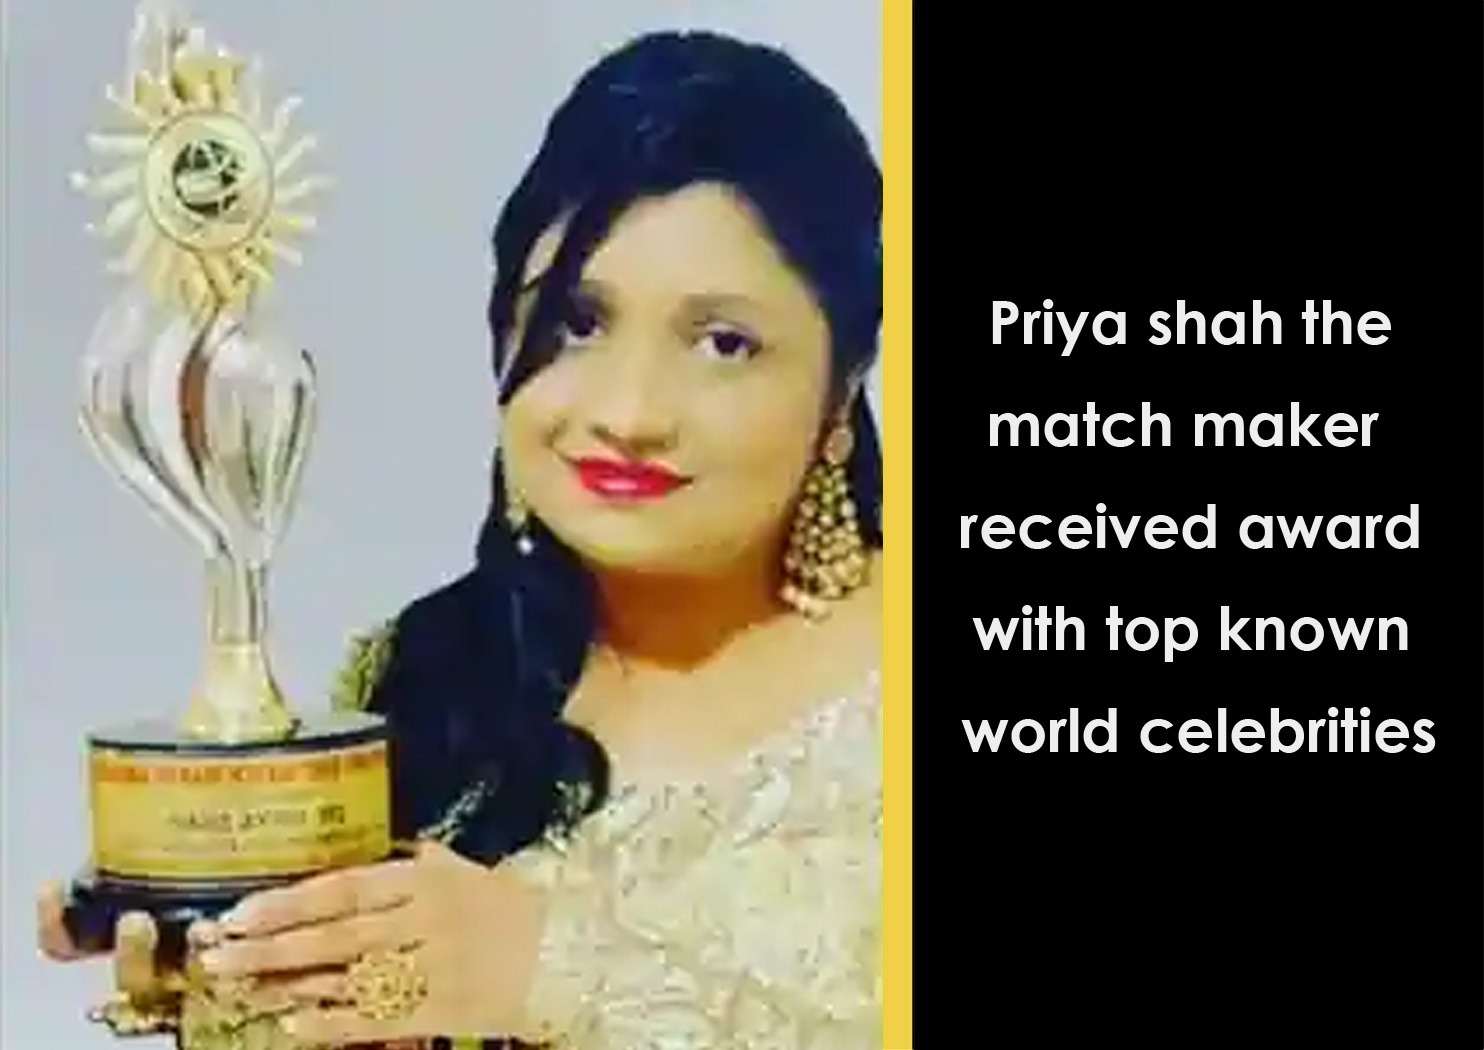 Priya shah the matchmaker